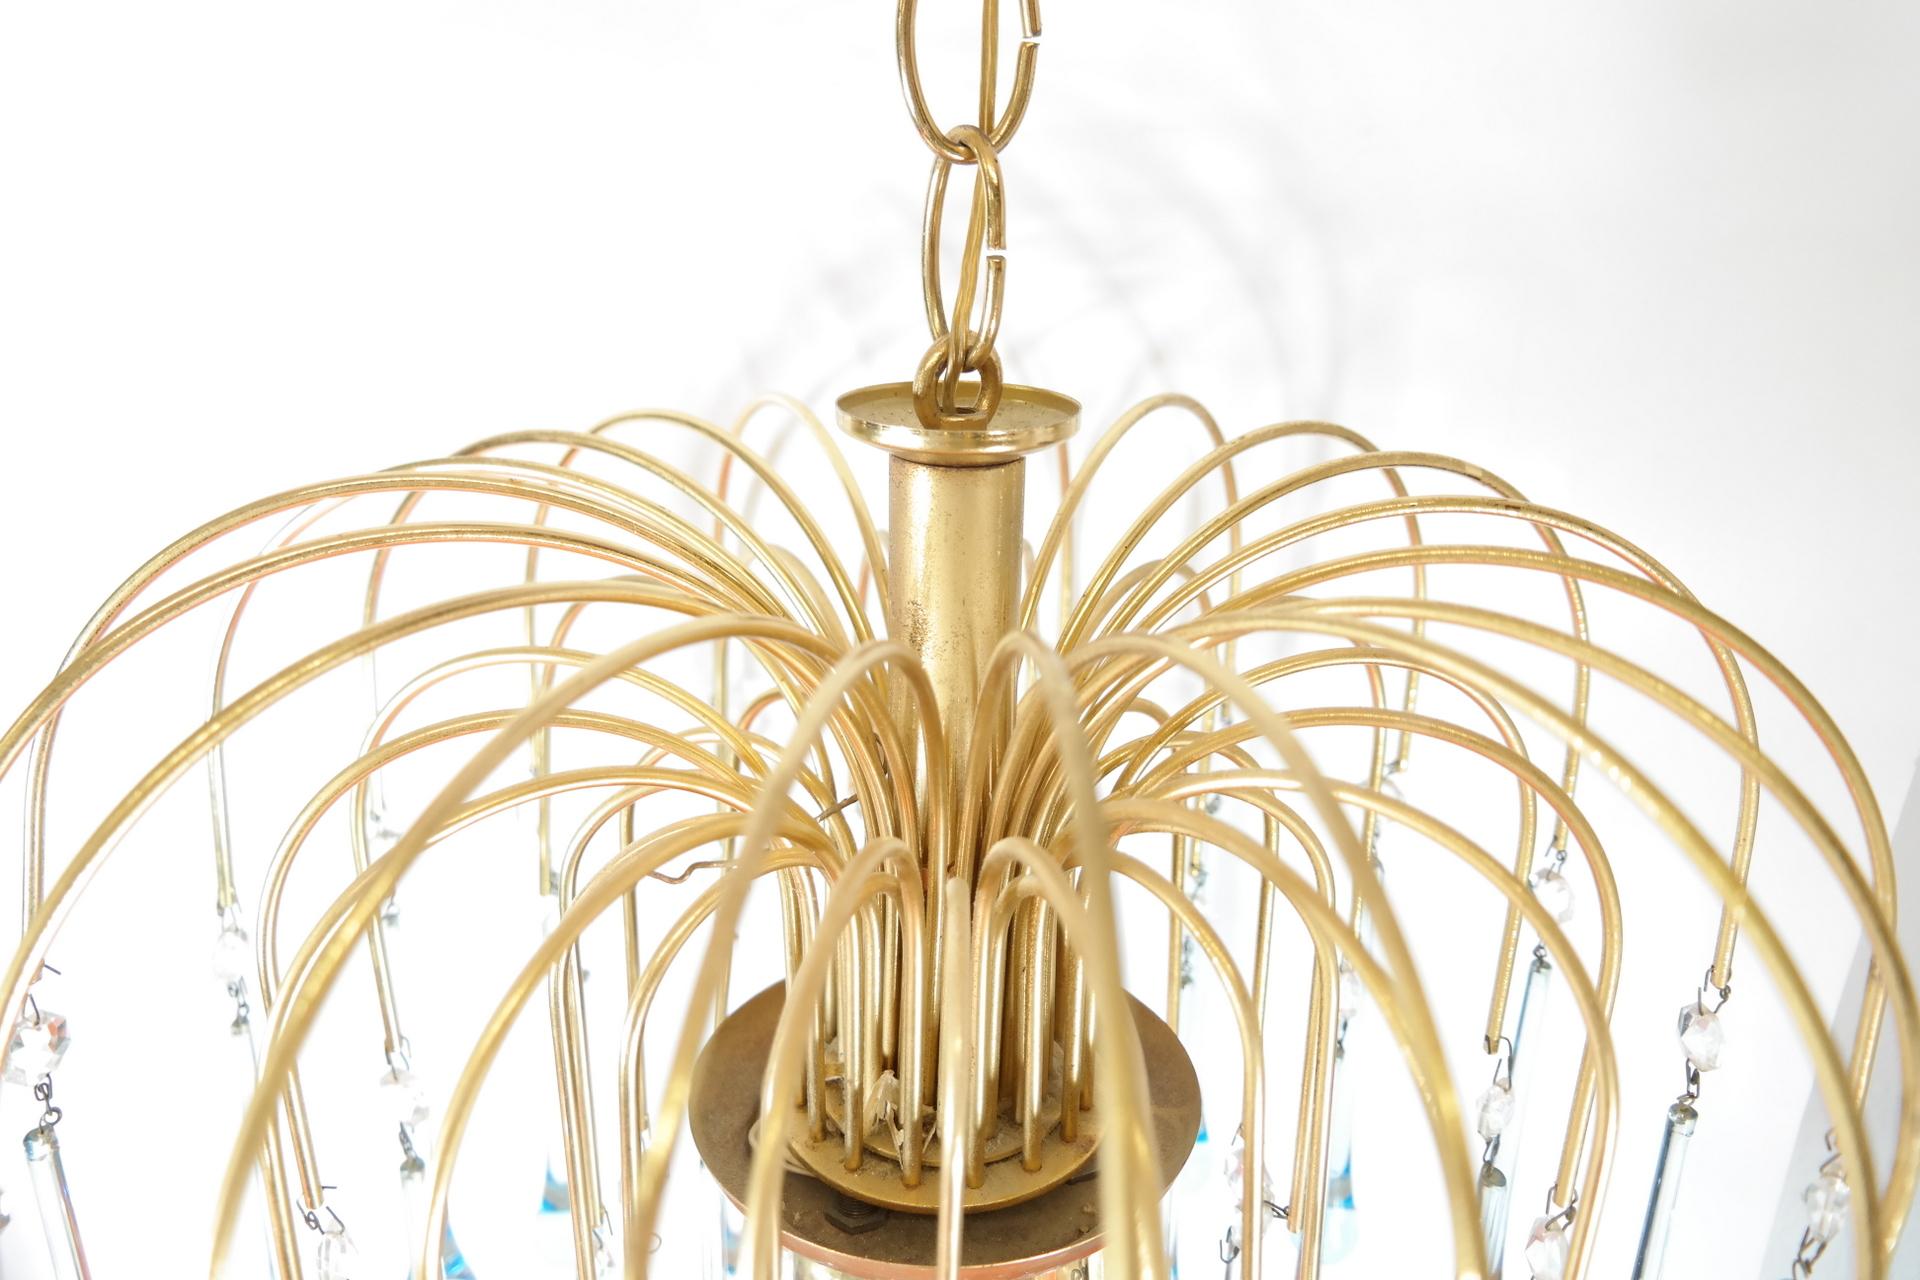 Murano glass chandelier in style of Paolo Venini, 1960s.